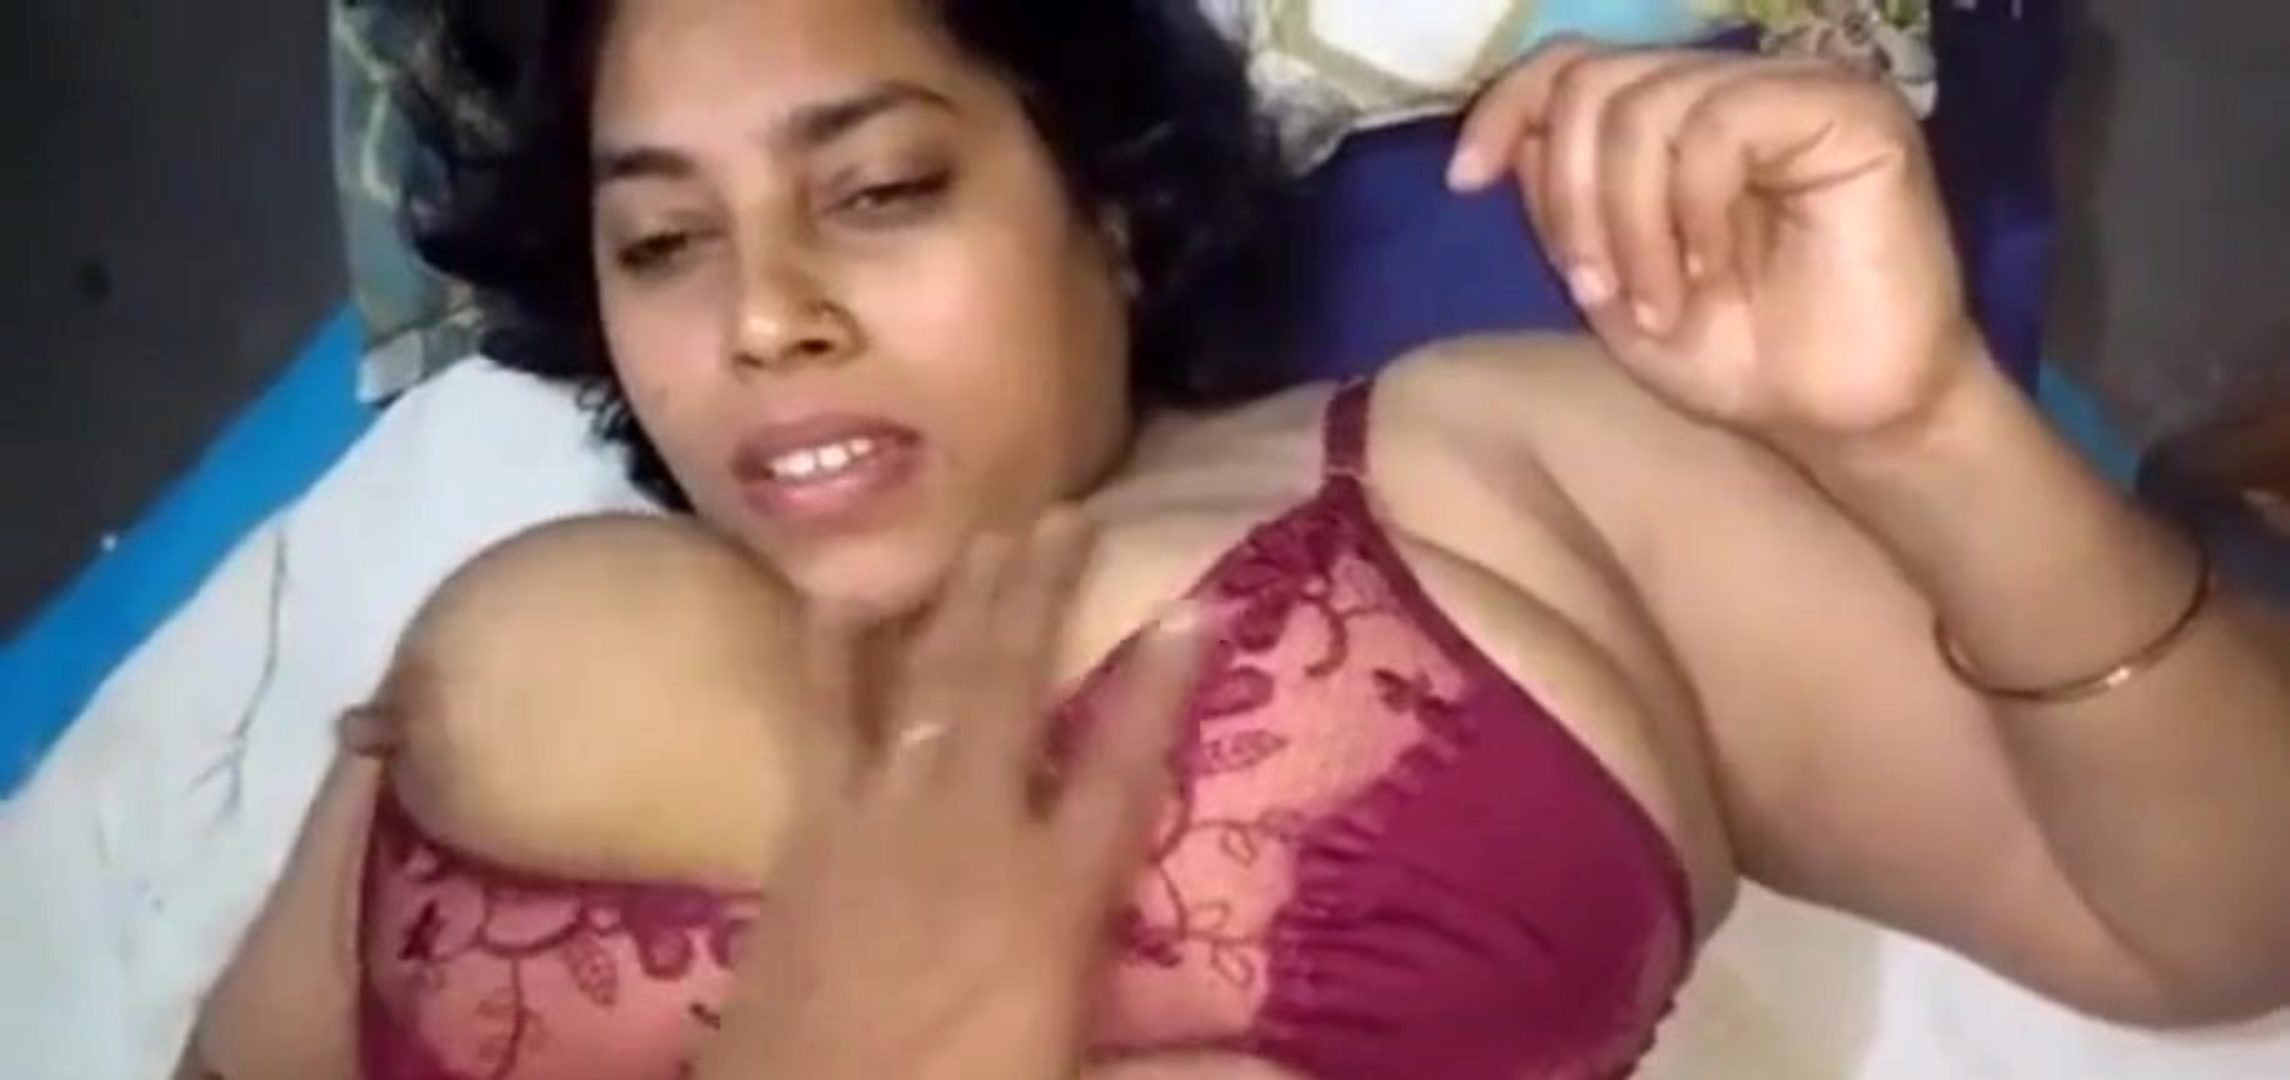 Havysex - Indian Sex Indian Aunty Fucks At Home Havy Sex - Tropic Tube